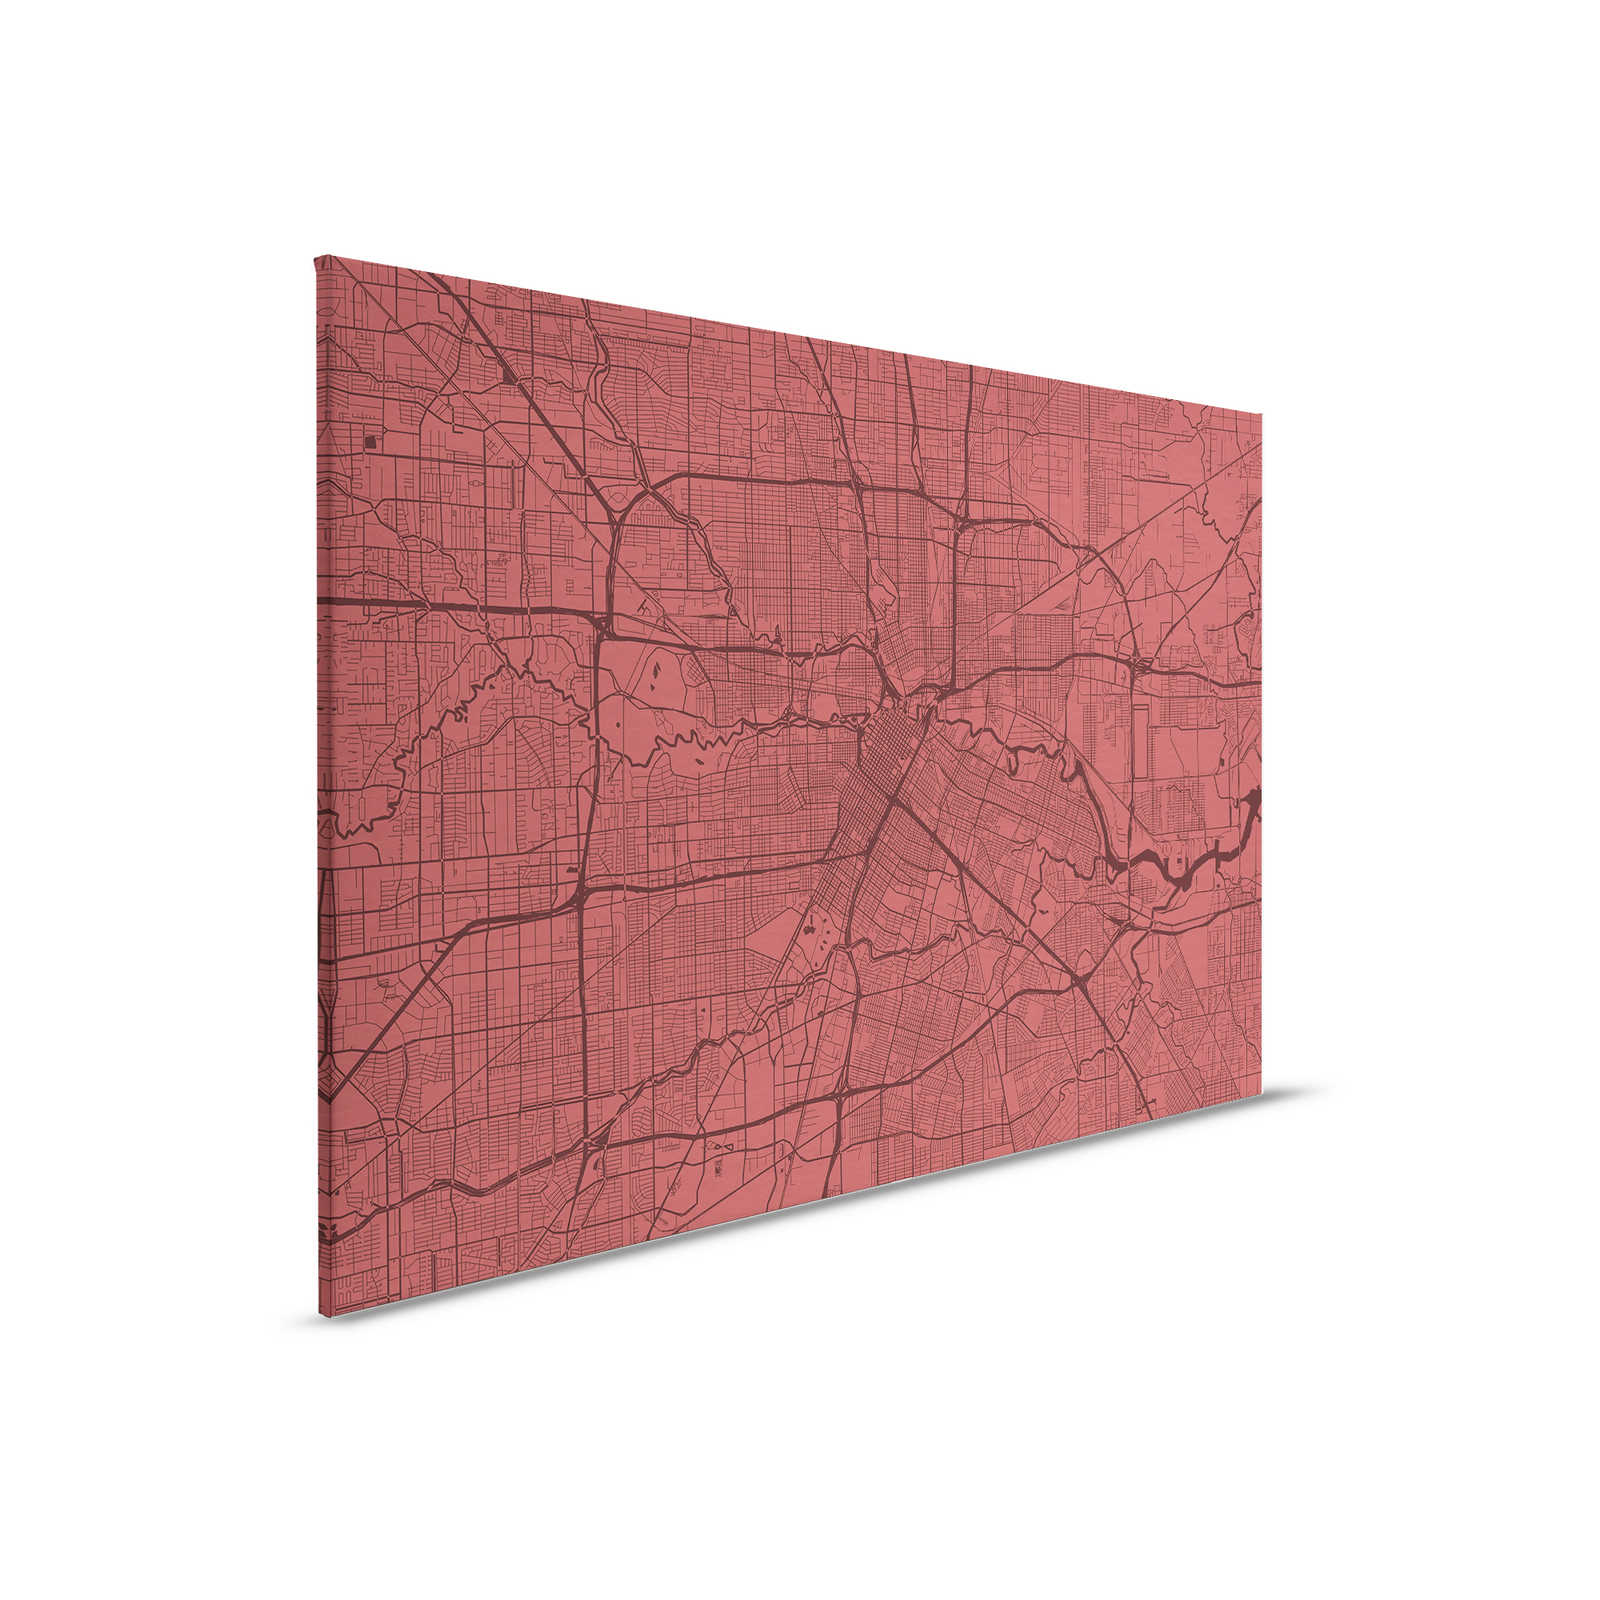         Leinwandbild Stadtkarte mit Straßenverlauf | rot – 0,90 m x 0,60 m
    